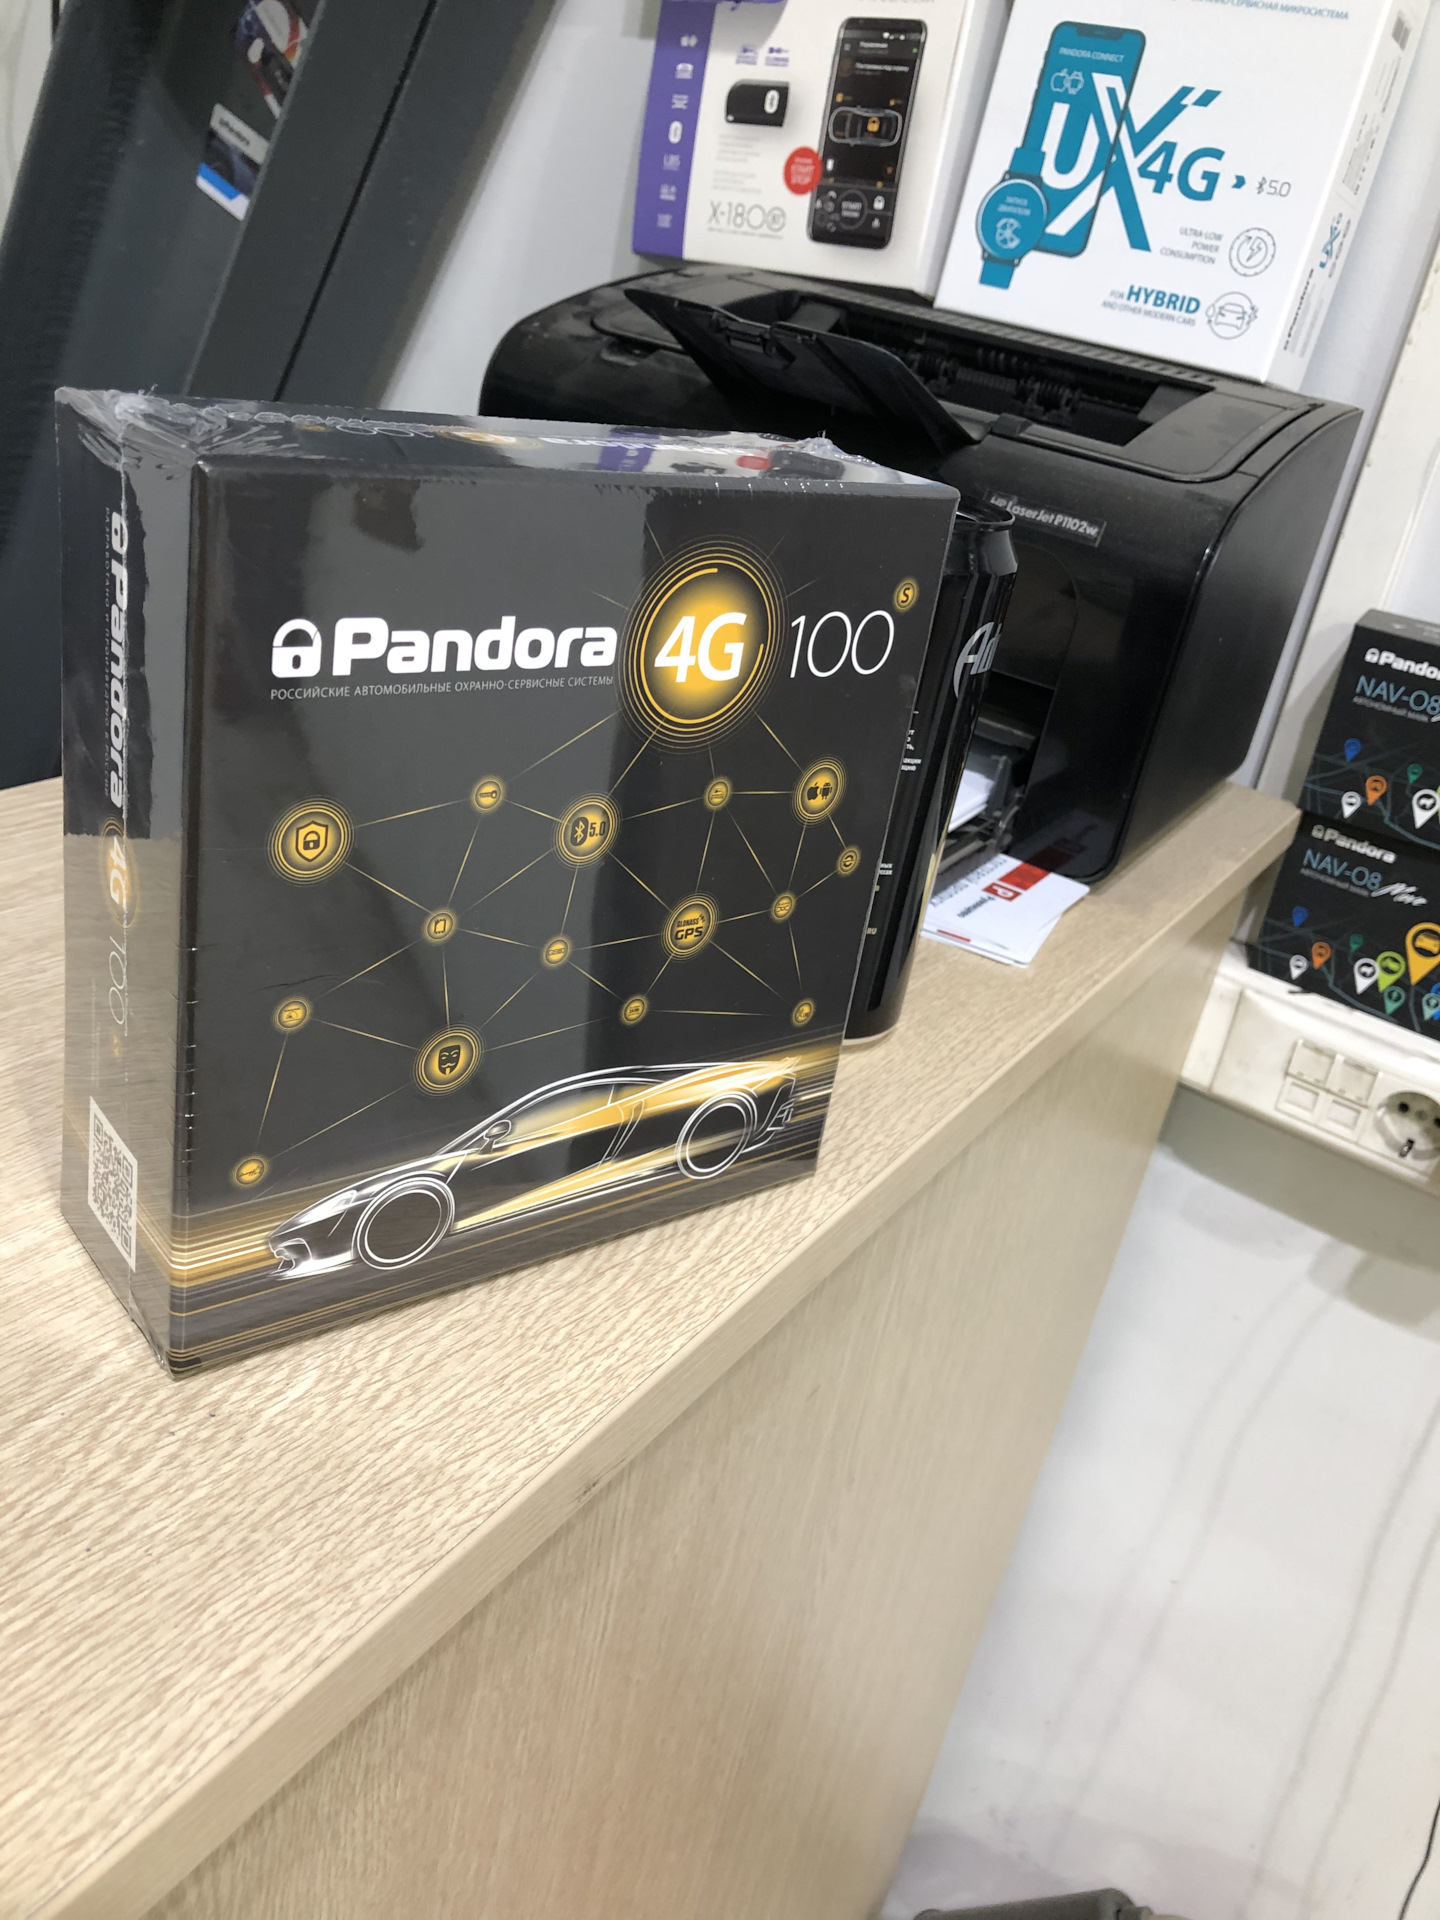 Pandora 4g gps v3. Pandora 4g 100. Pandora 4g 100s. Сигнализация pandora 4g 100. Pandora 4g 100 GPS.